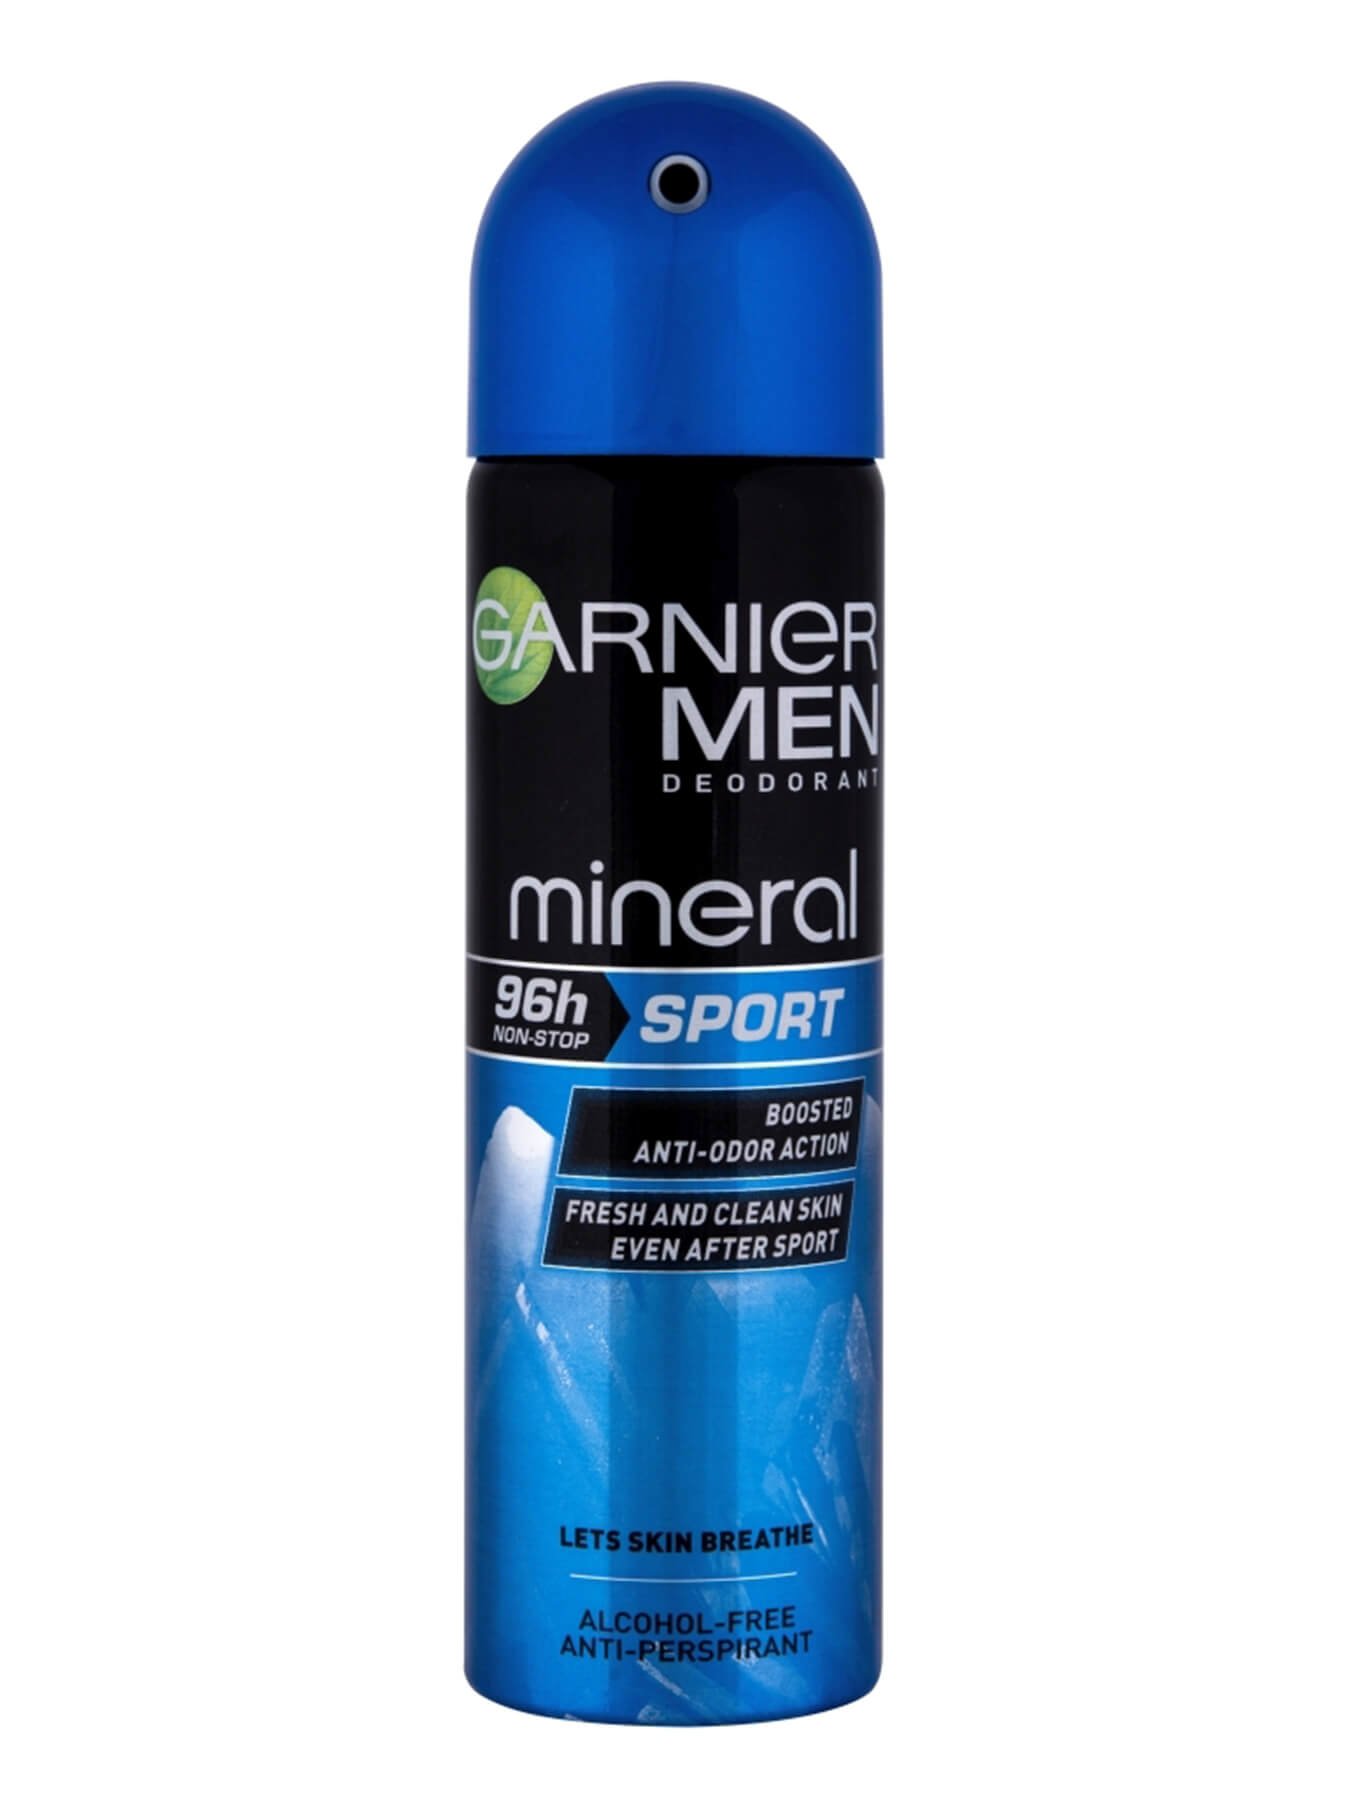 Garnier Mineral Deo Men Anti-perspirant 96H Sport Спрей 